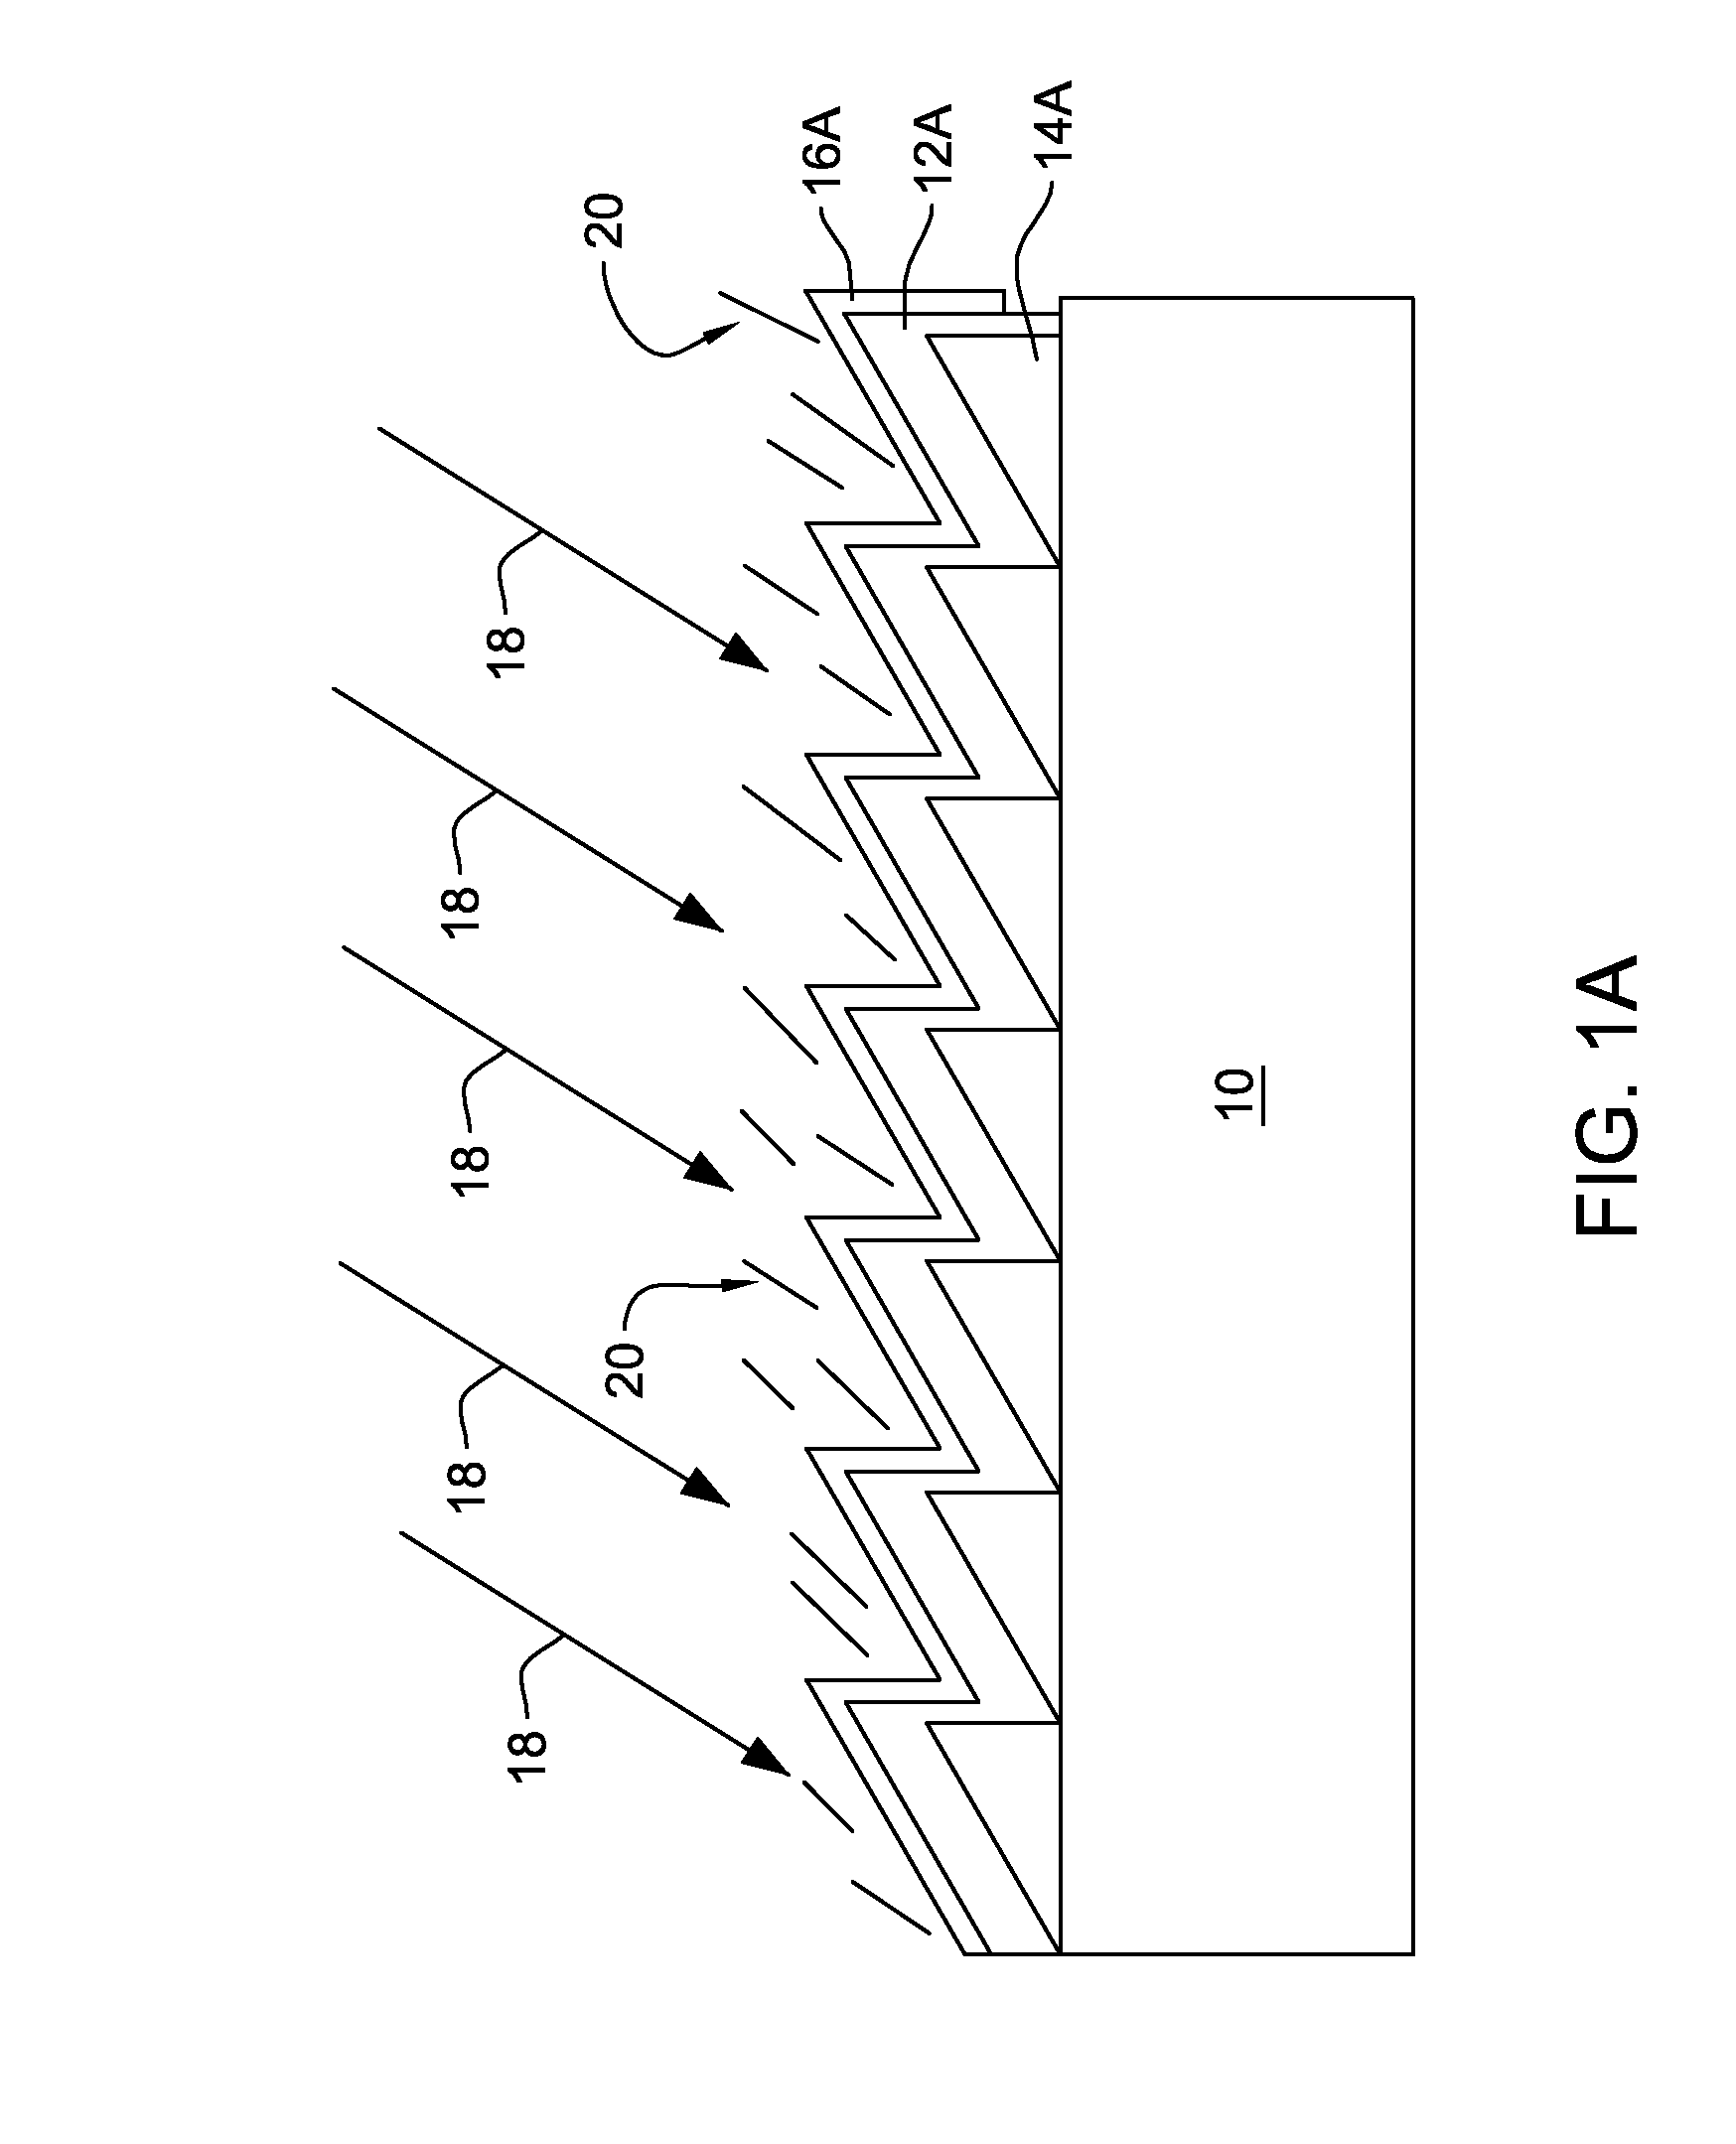 Method of producing UV stable liquid crystal alignment